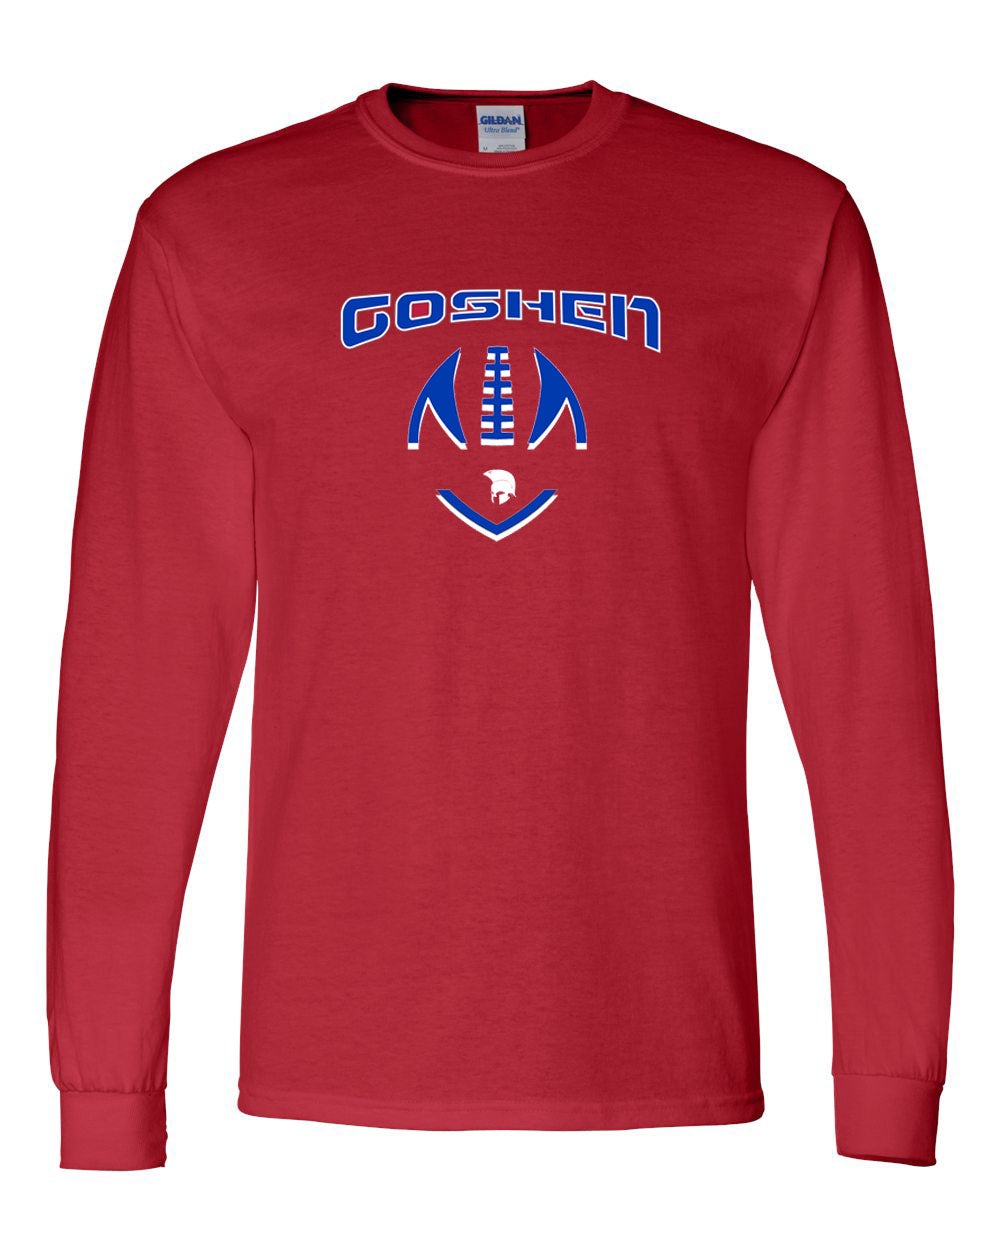 Goshen Football Long Sleeve Shirt